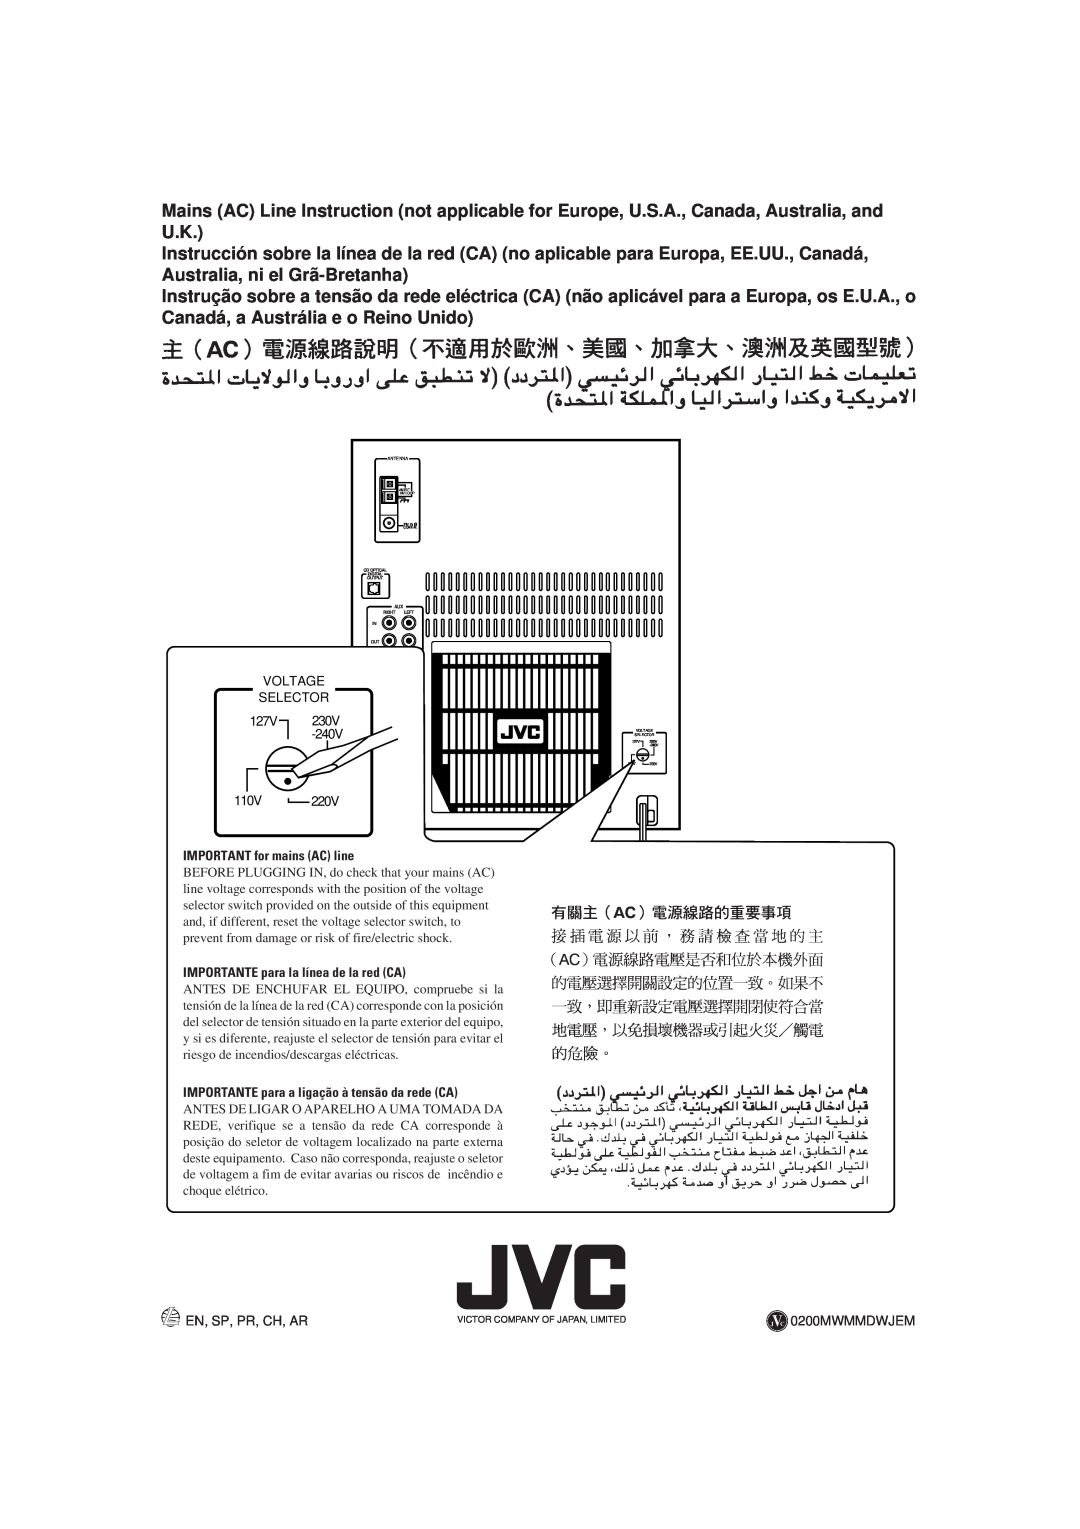 JVC CA-MXJ900 manual IMPORTANT for mains AC line, IMPORTANTE para la línea de la red CA, JVC 0200MWMMDWJEM 